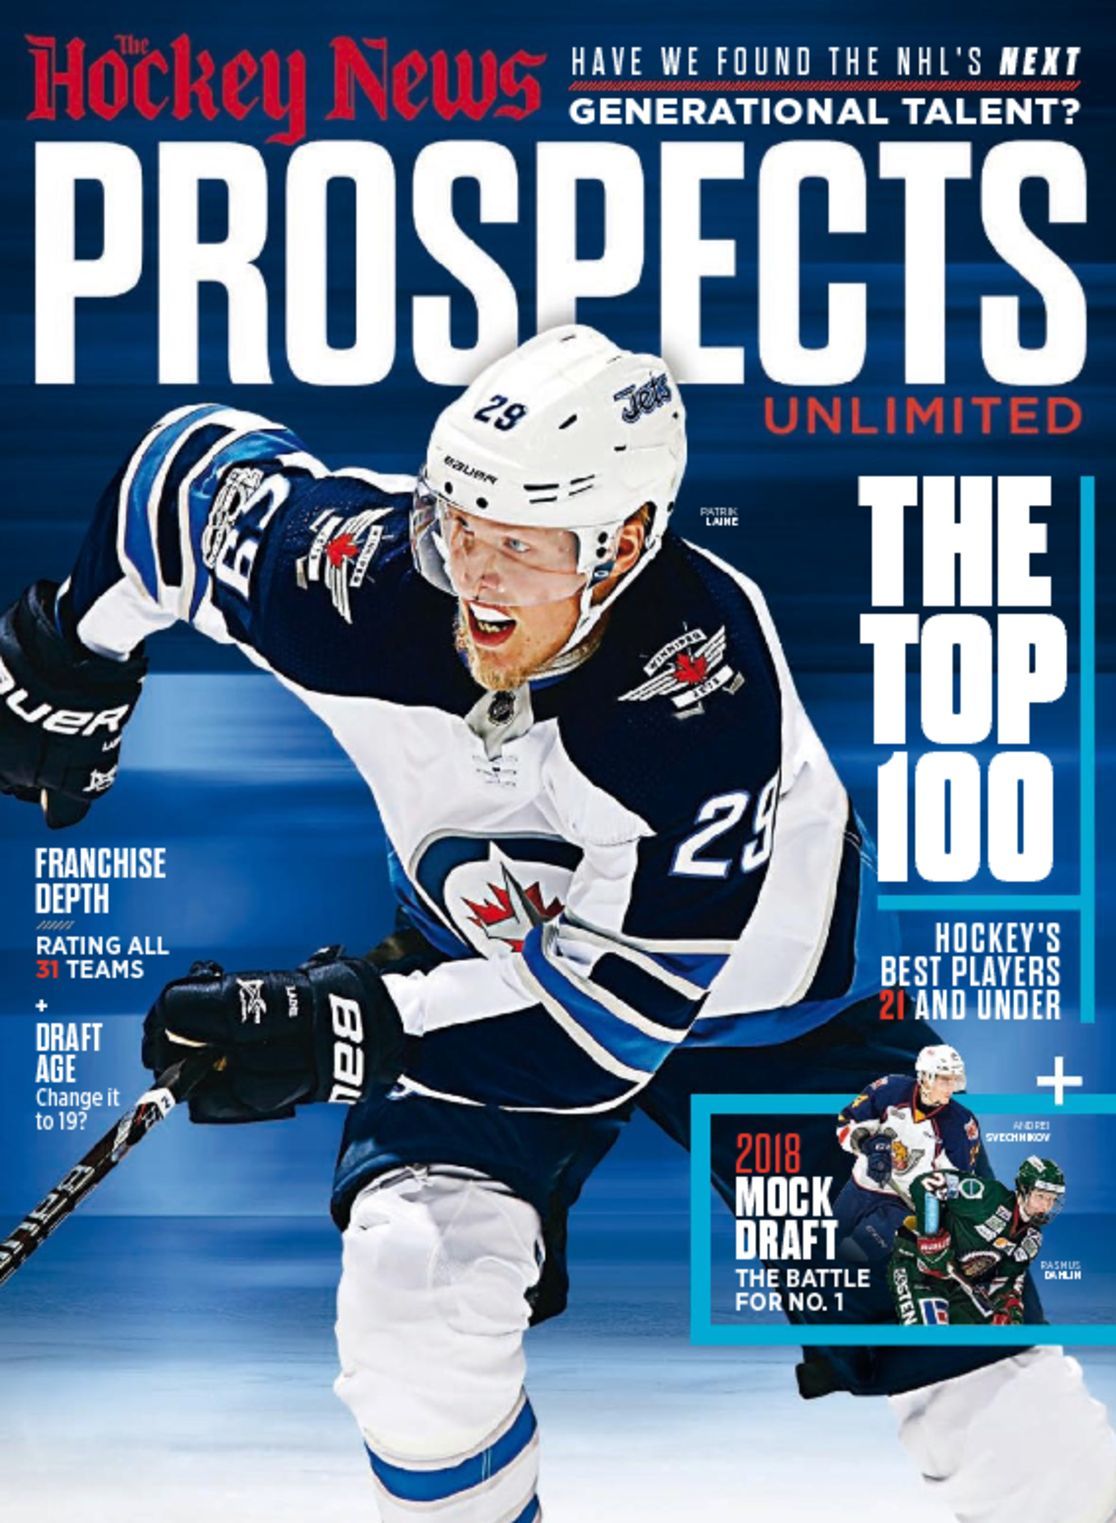 10367 The Hockey News Cover 2017 November 6 Issue 